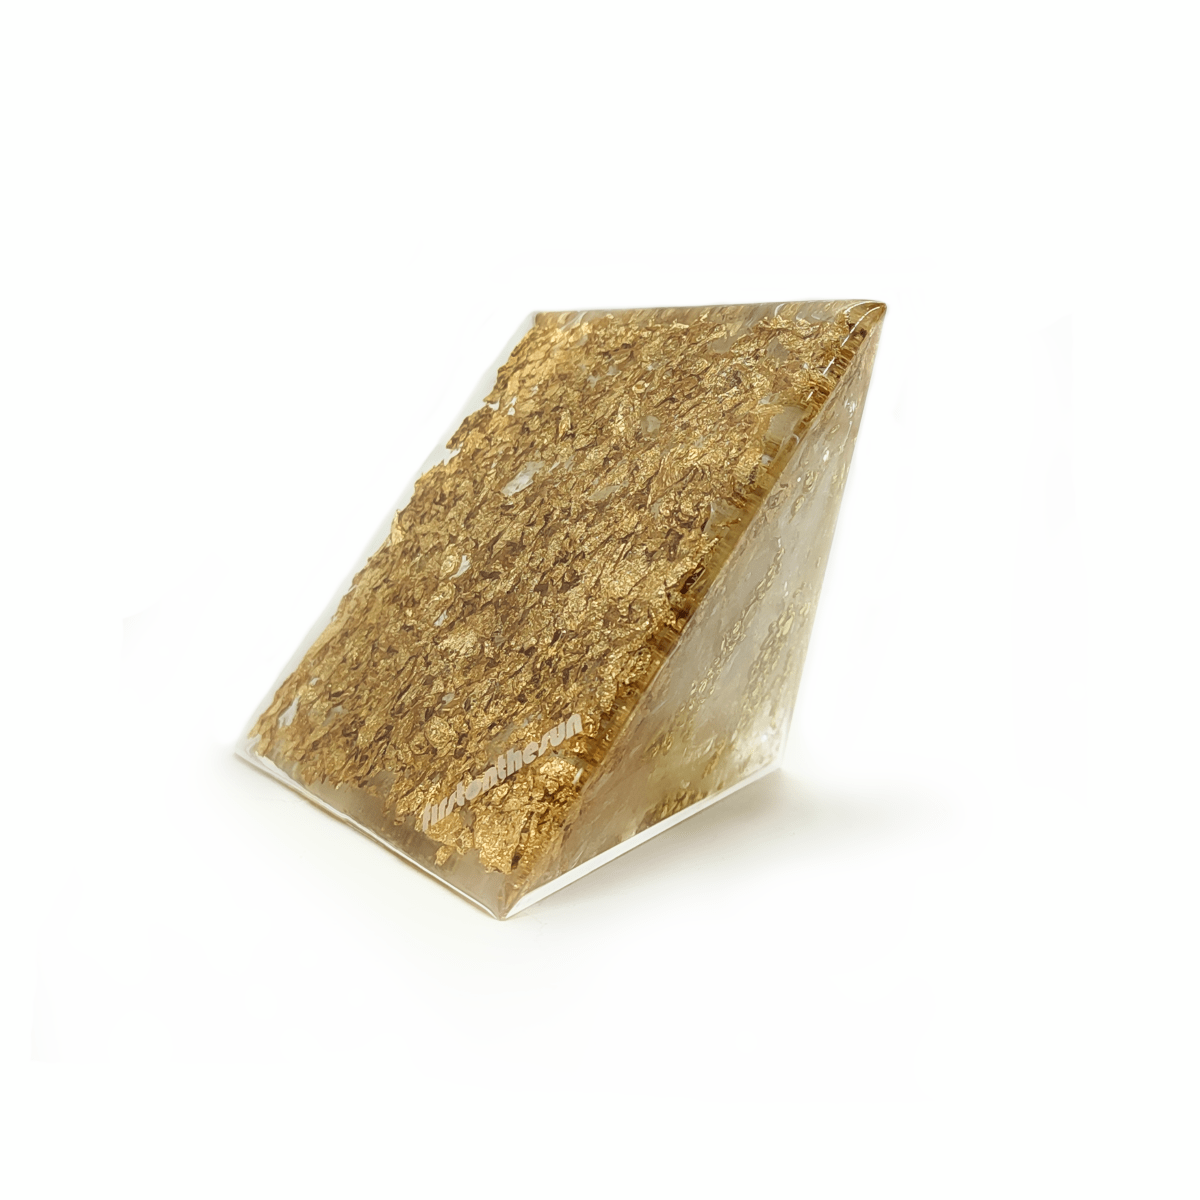 Goldene Bodenfläche eines Bergkristall Orgonit.